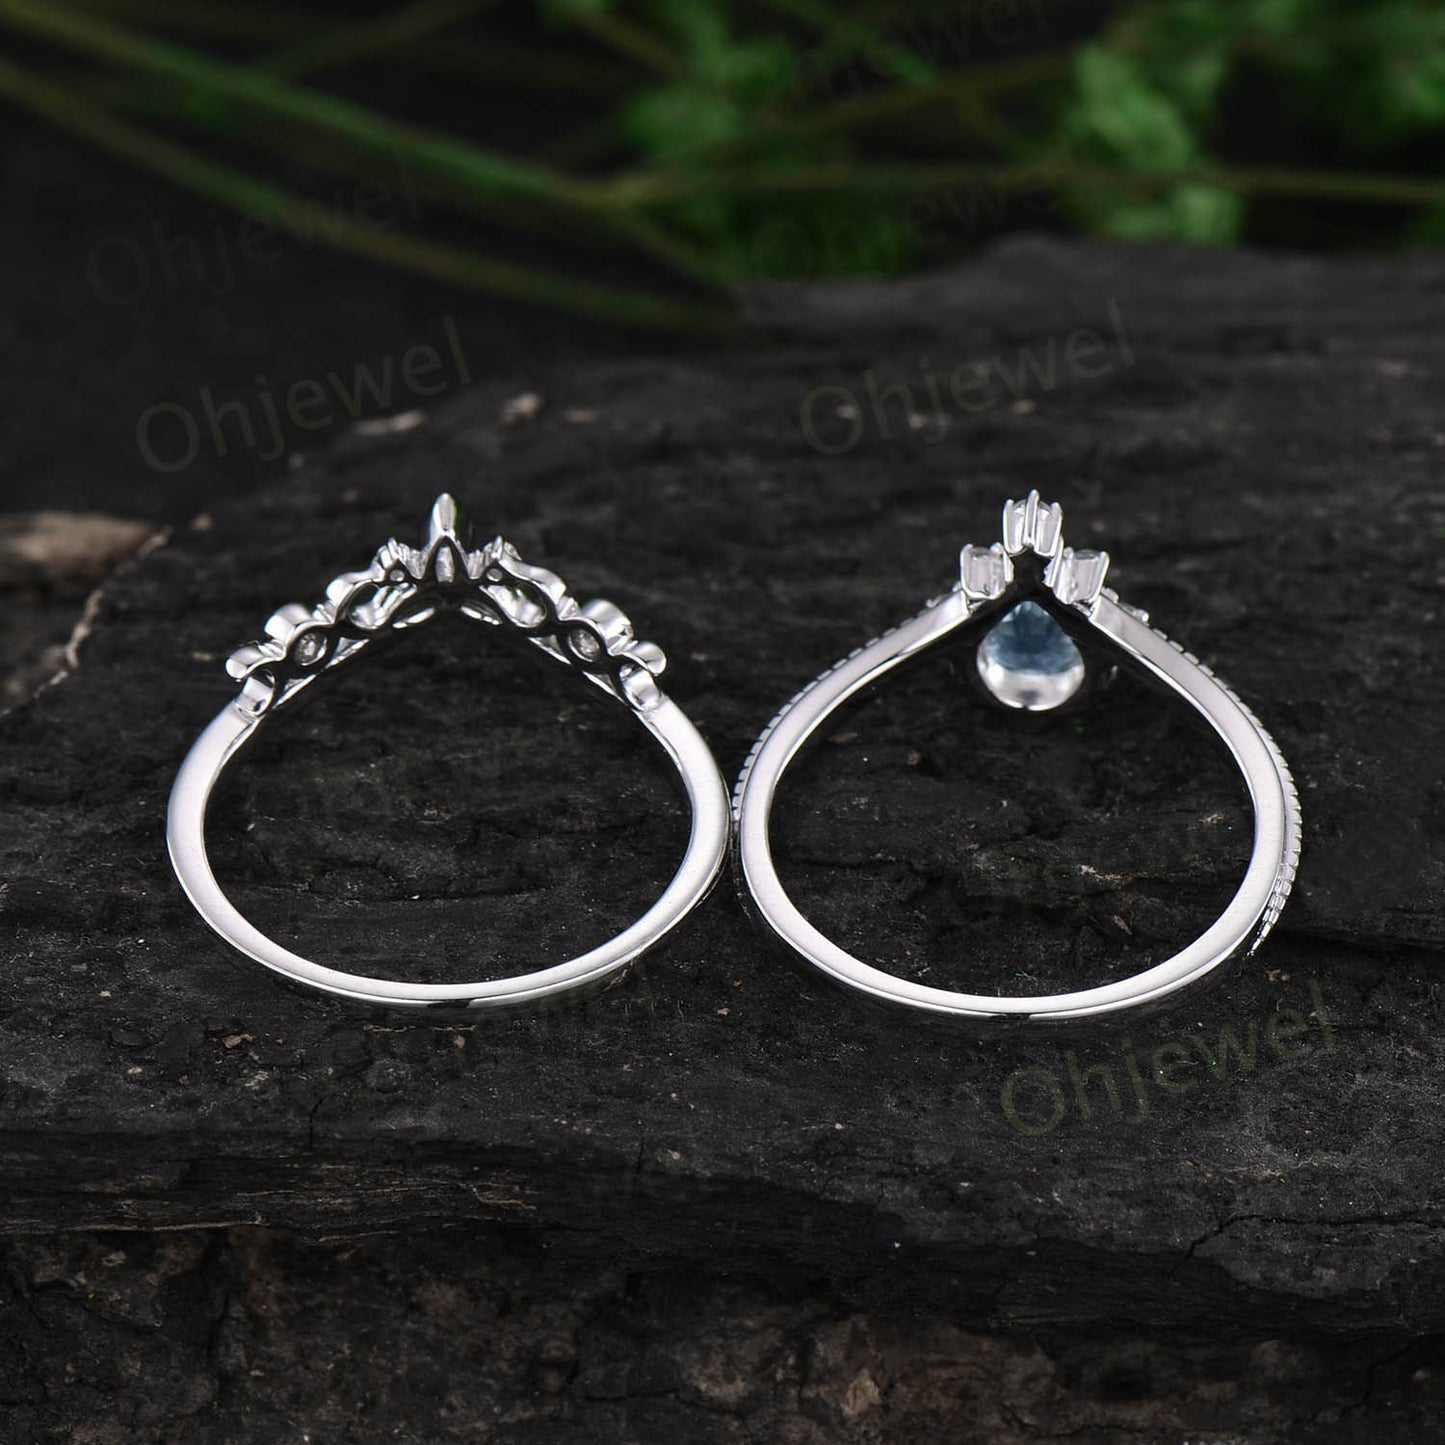 Pear shaped aquamarine engagement ring set 14k rose gold milgrain moissanite ring for women march birthstone norse viking ring Jewelry